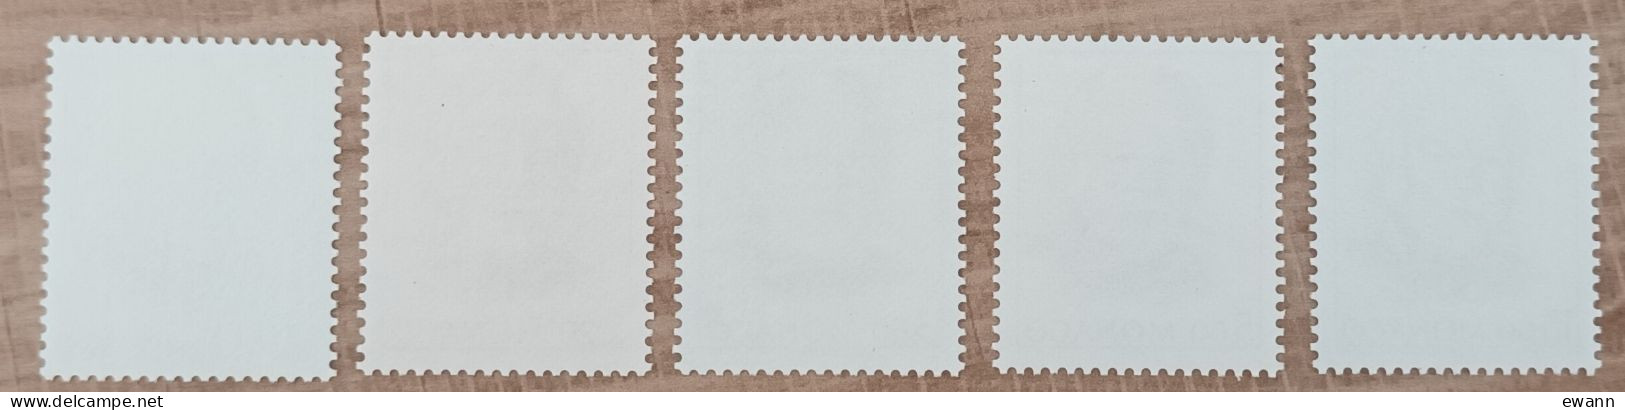 Monaco - YT N°1671 à 1675 - S.A.S. Rainier III - 1989 - Neuf - Unused Stamps